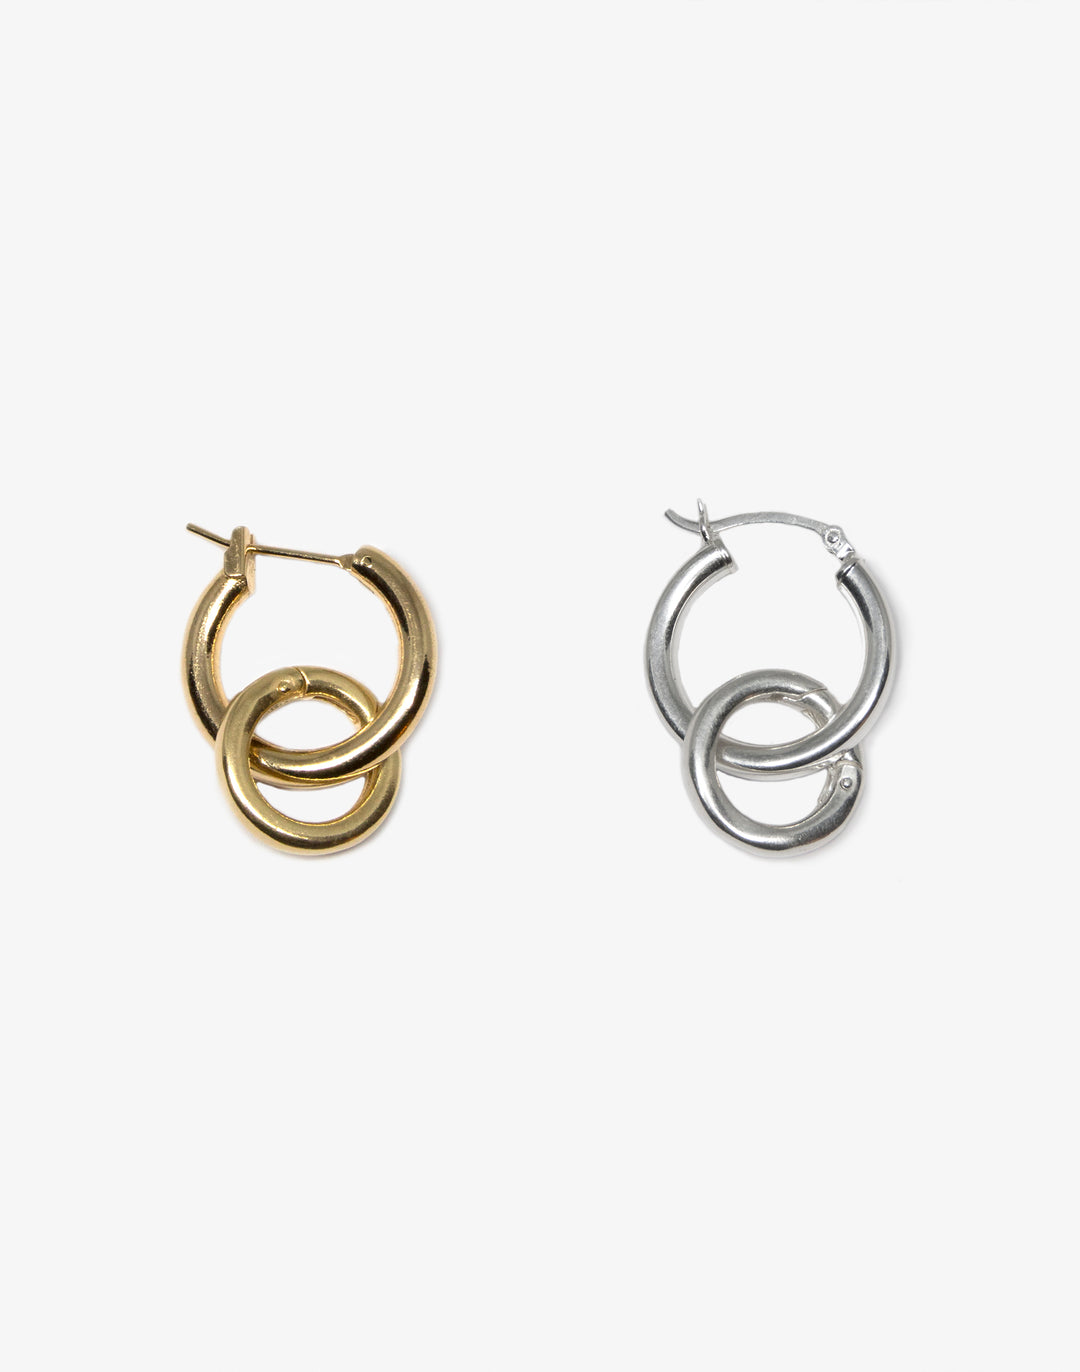 llayers Silver gold loop women hoops earring minimal jewelry Made In Brooklyn New York F3